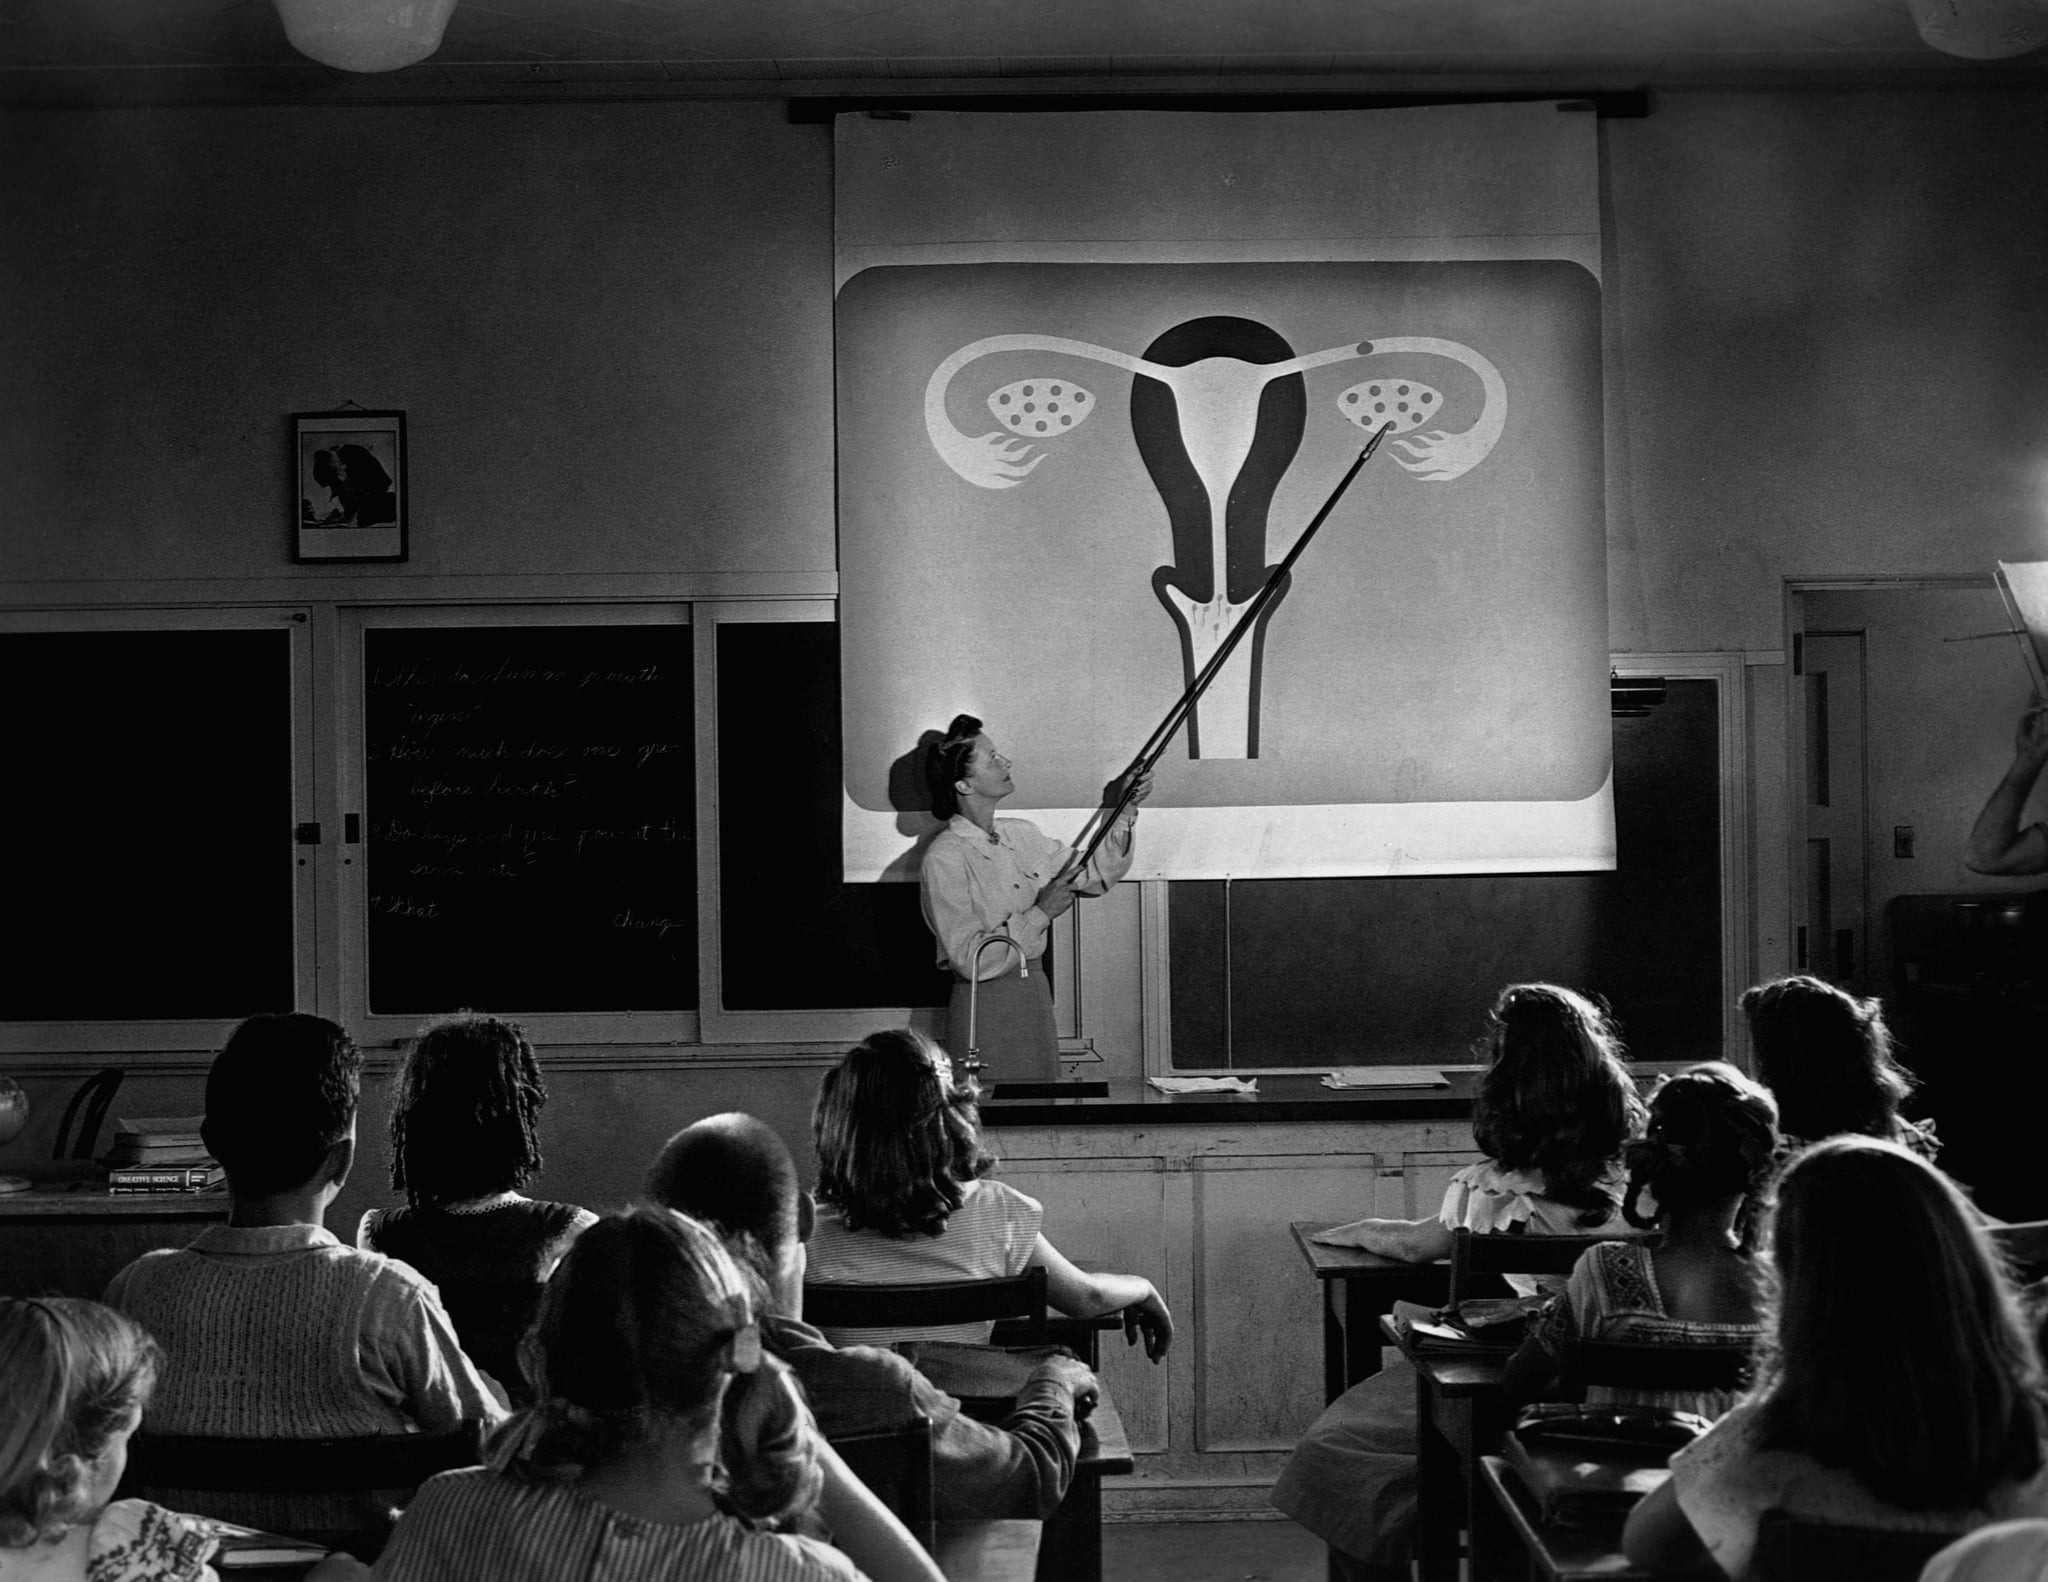 sex education in schools history